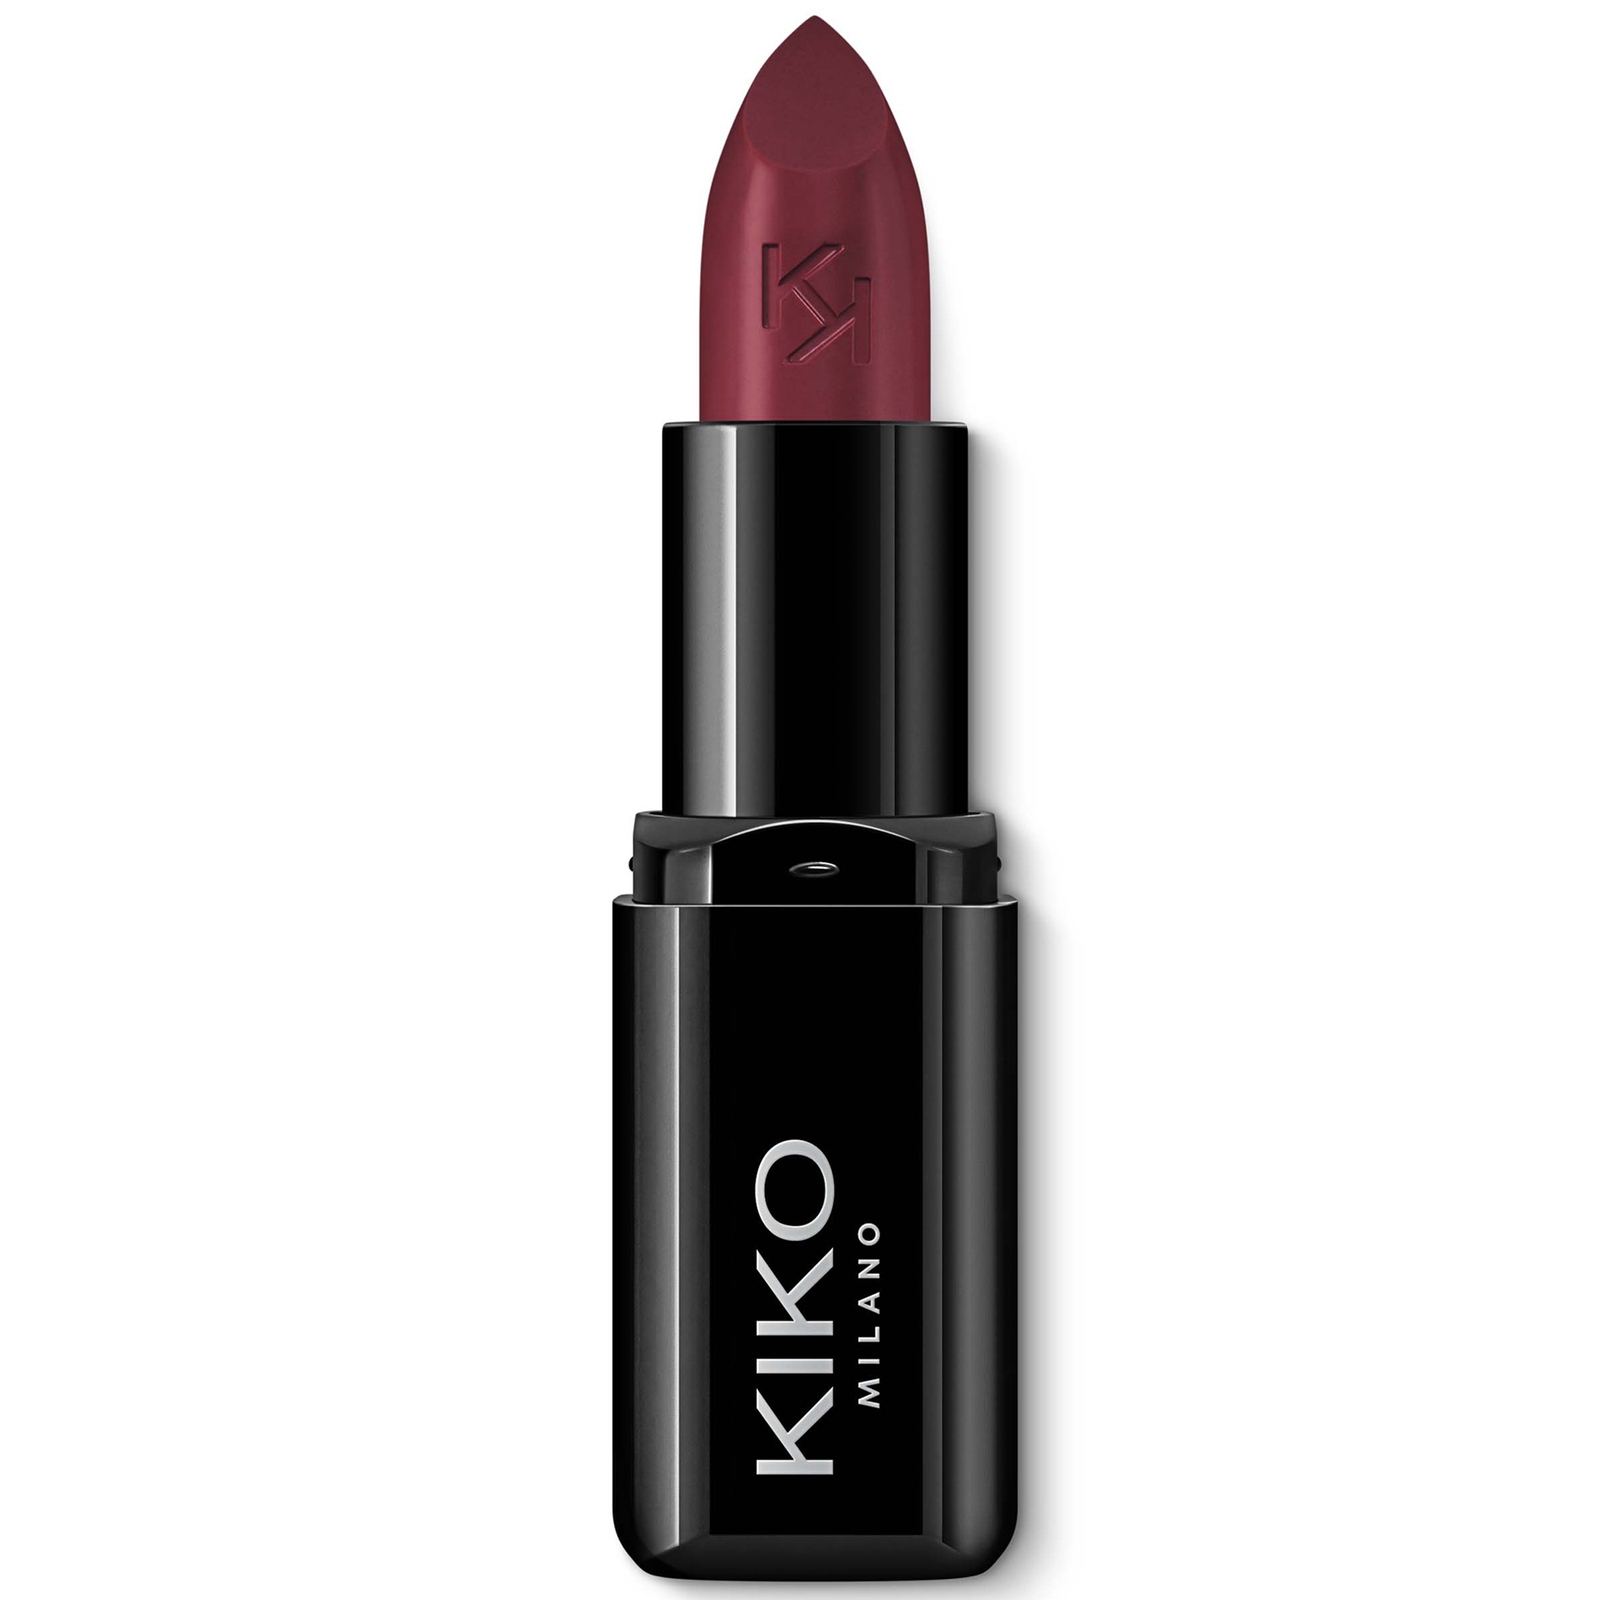 KIKO Milano Smart Fusion Lipstick 3g (Various Shades) - 417 Bordeaux